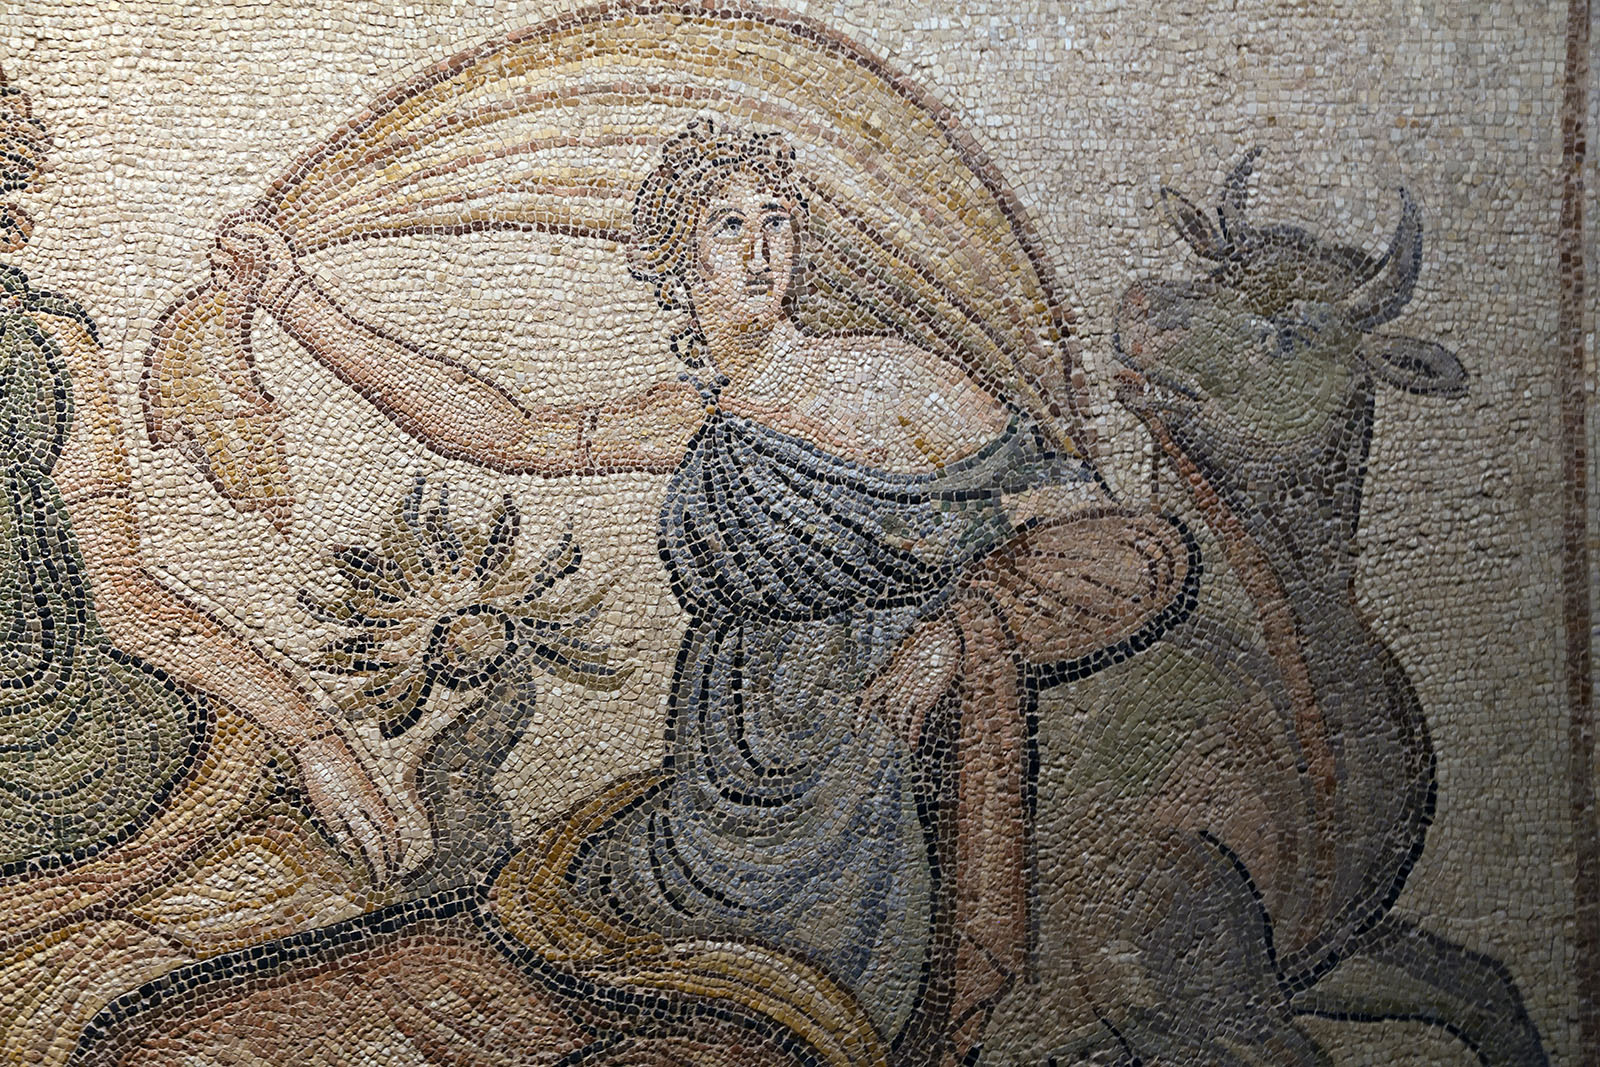 Gaziantep Zeugma museum Zeus and Europa mosaic sept 2019 4107.jpg